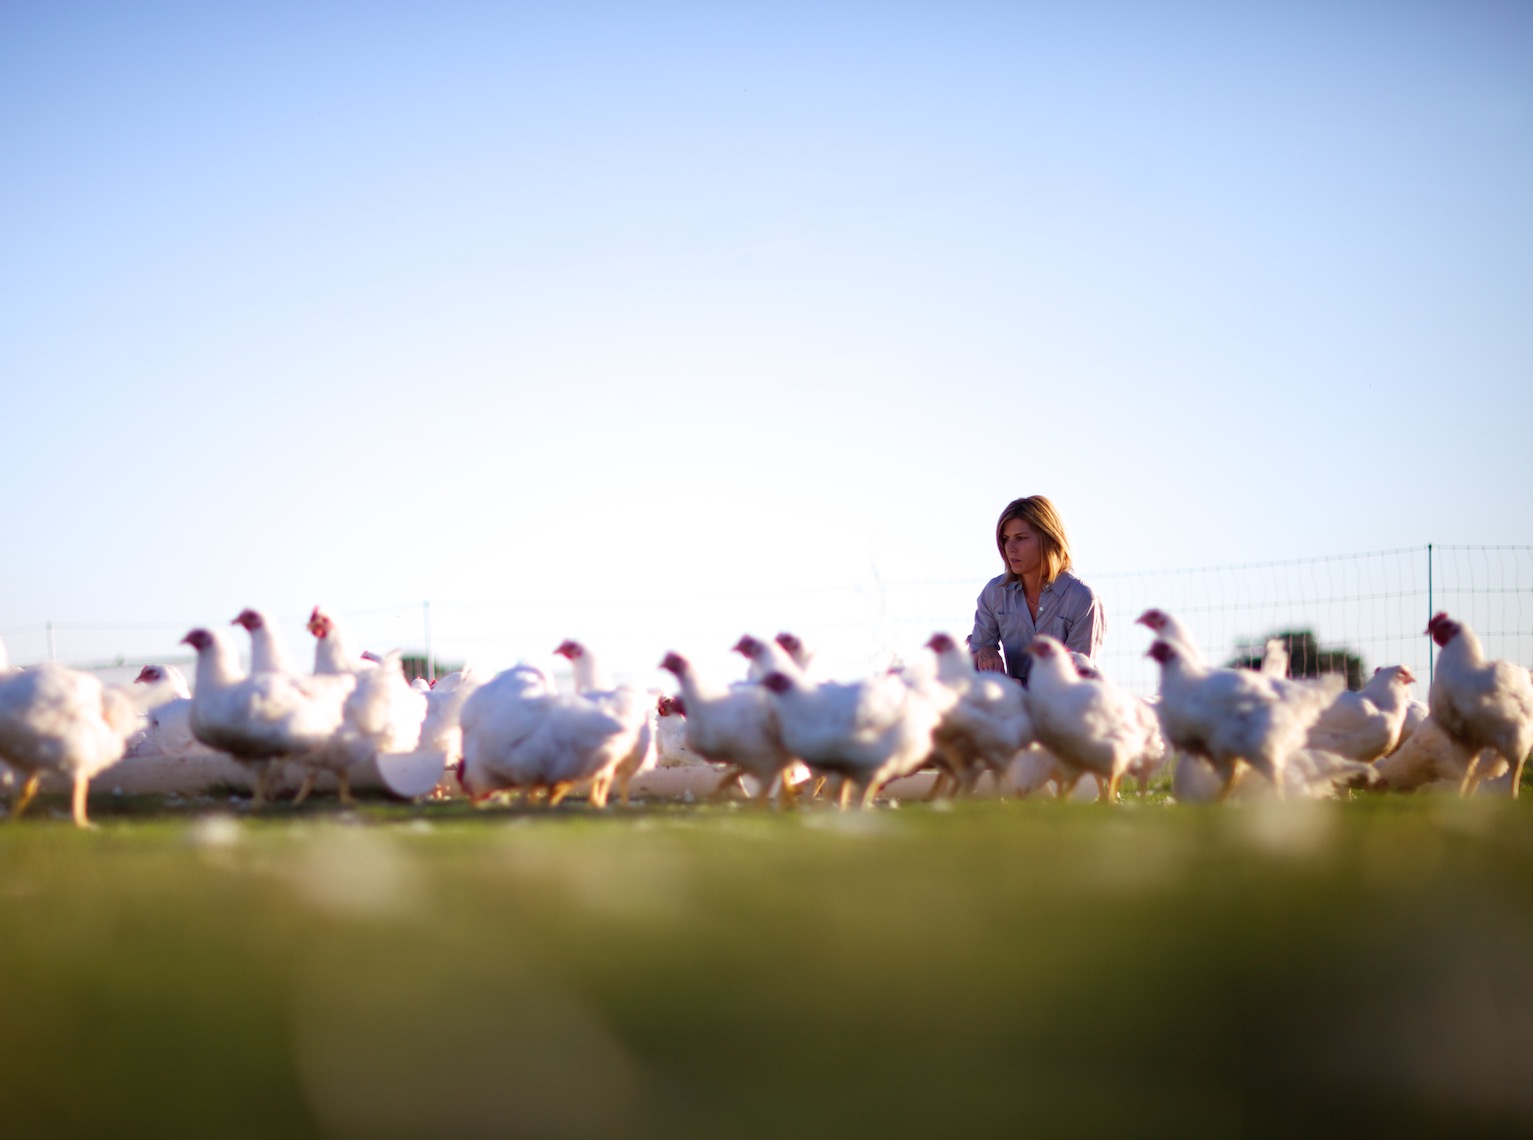 peeler-farms-chickens-texas-jason-risner-photography-1564